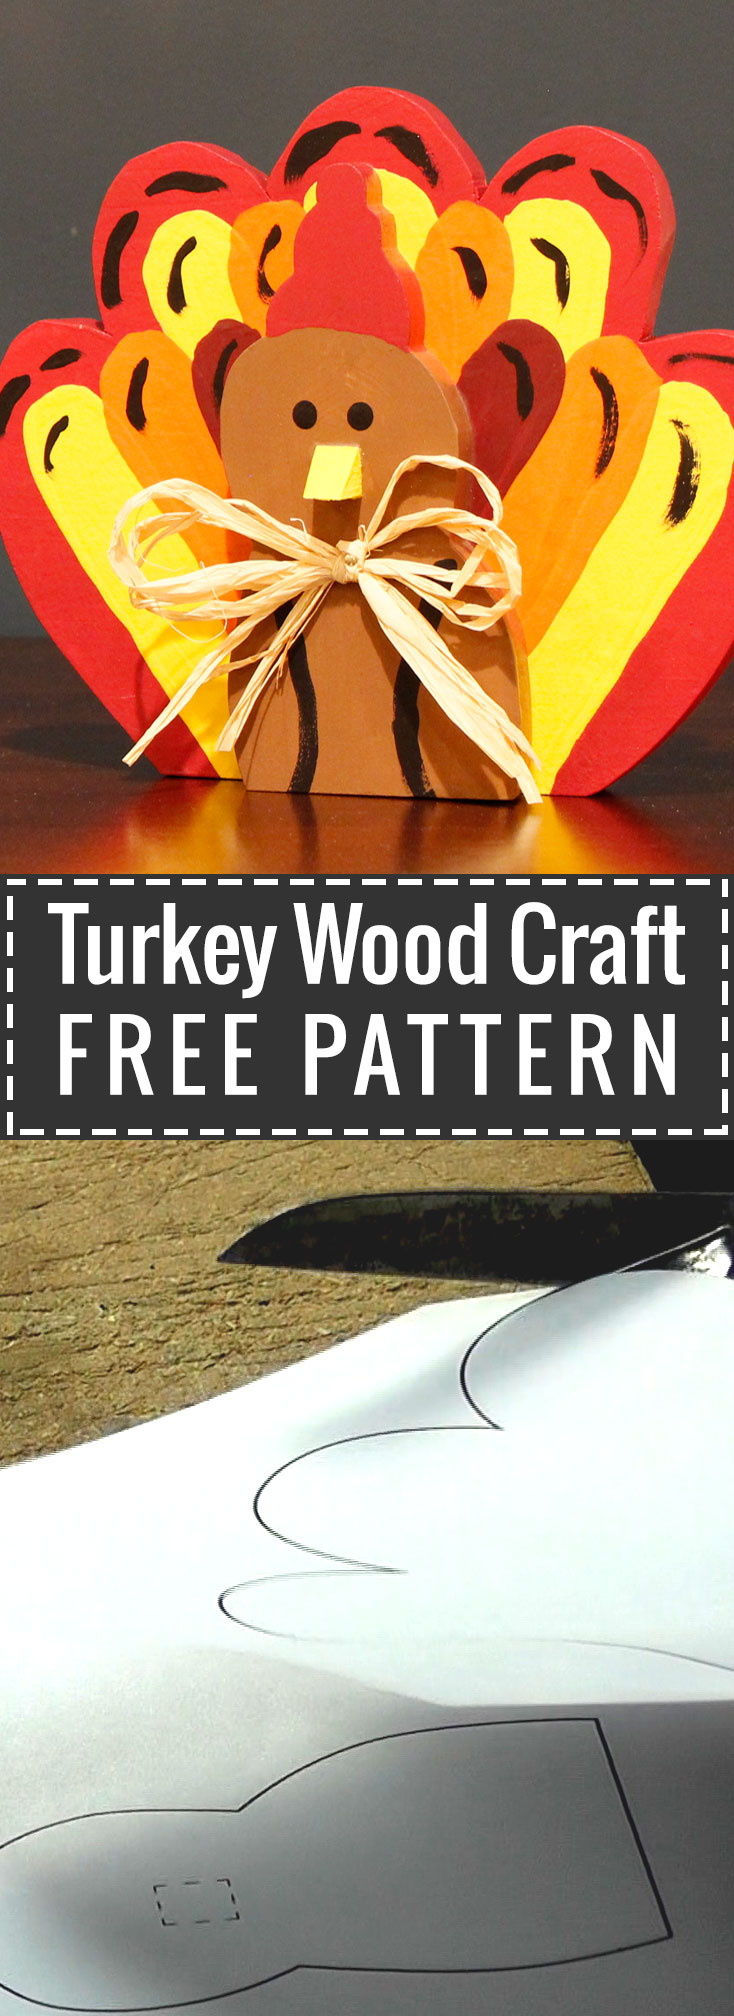 Turkey Wood Craft Free Pattern